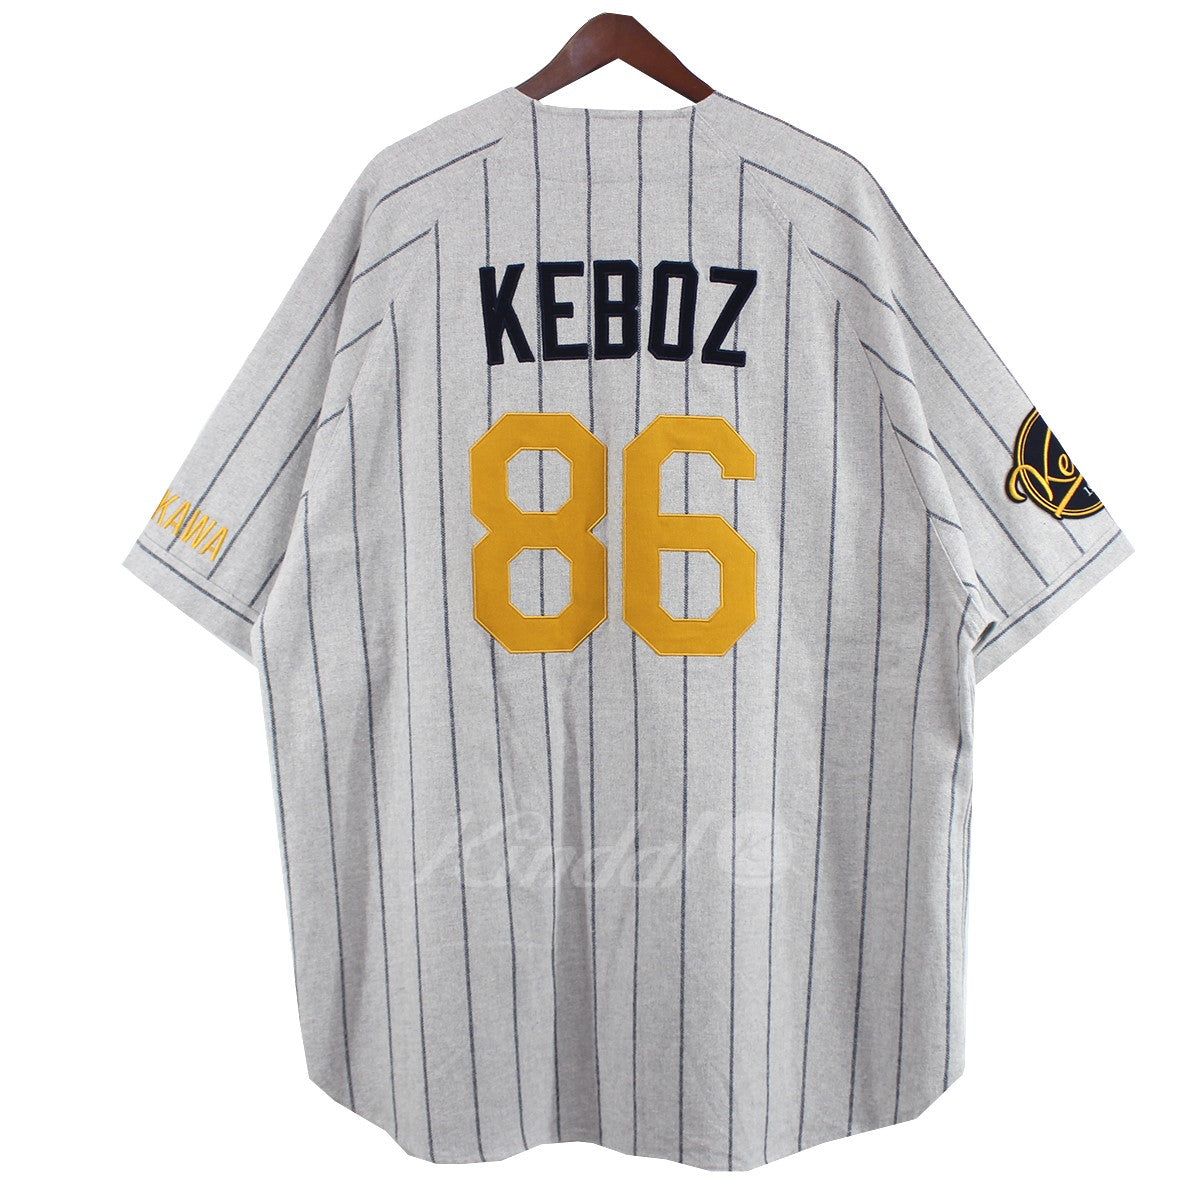 KEBOZ(ケボズ) FREAK'S STORE 別注 BASEBALLL SHIRT ベースボール 